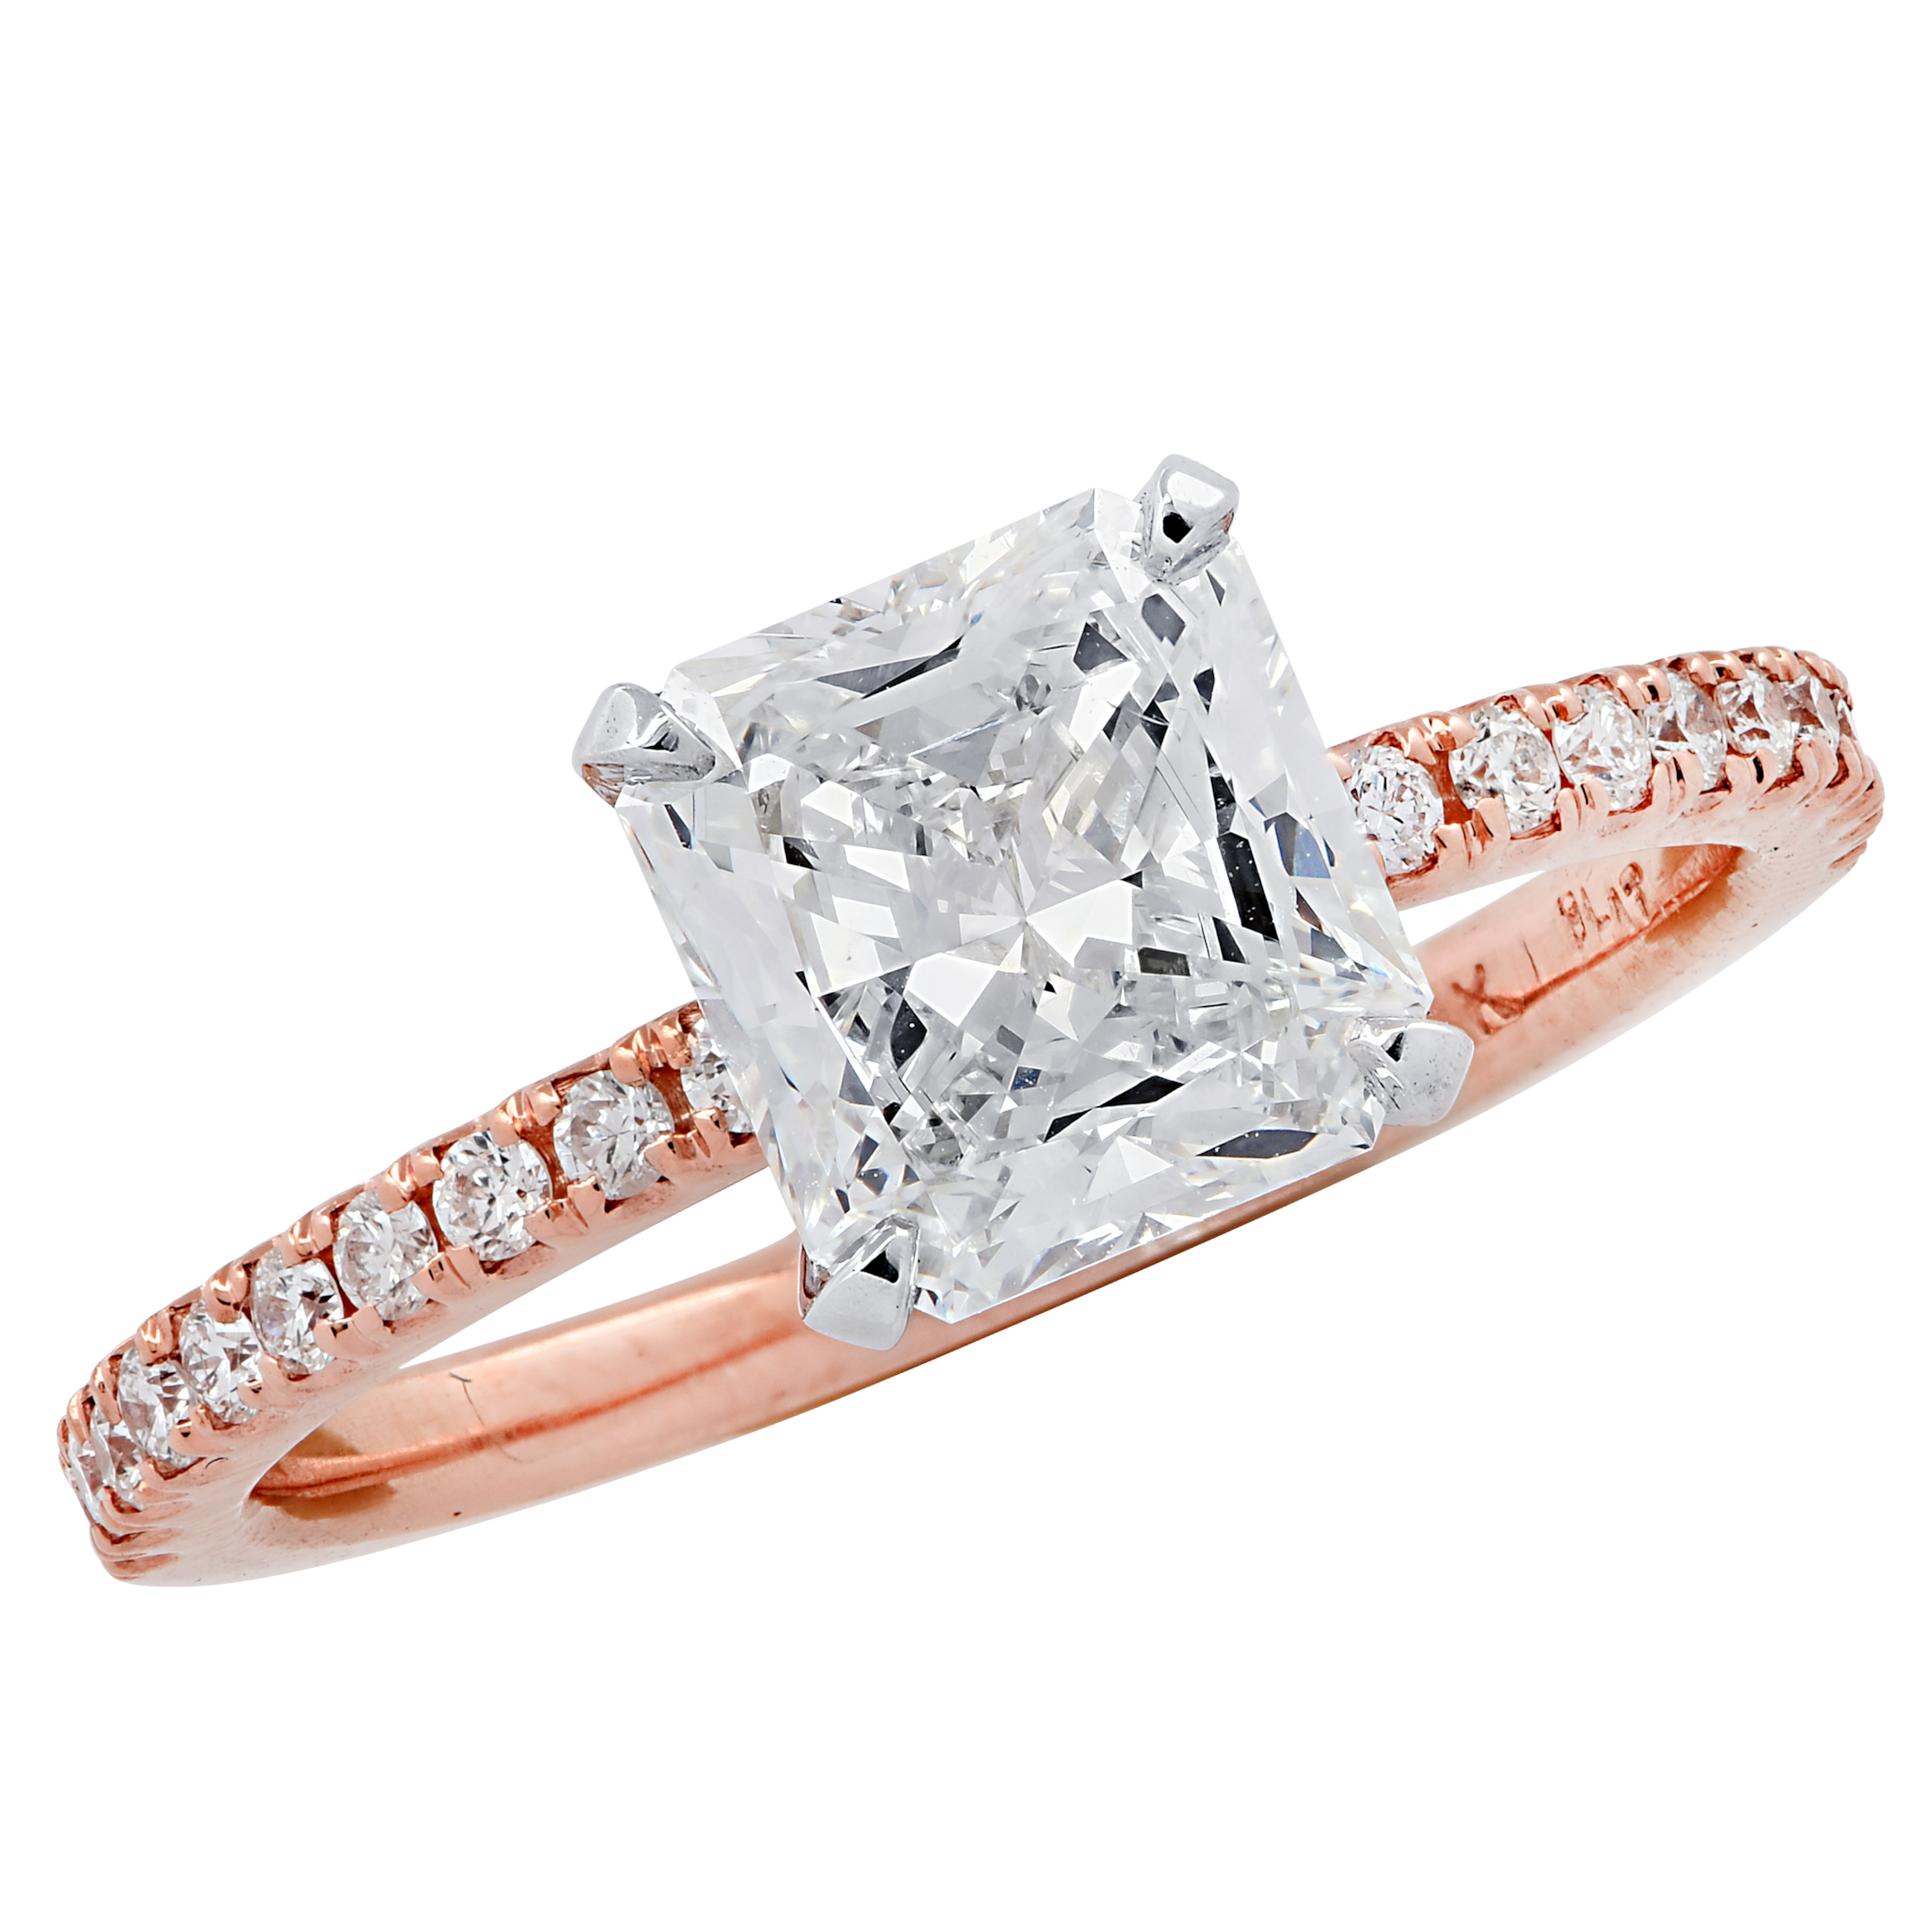 Two-tone radiant cut diamond ring